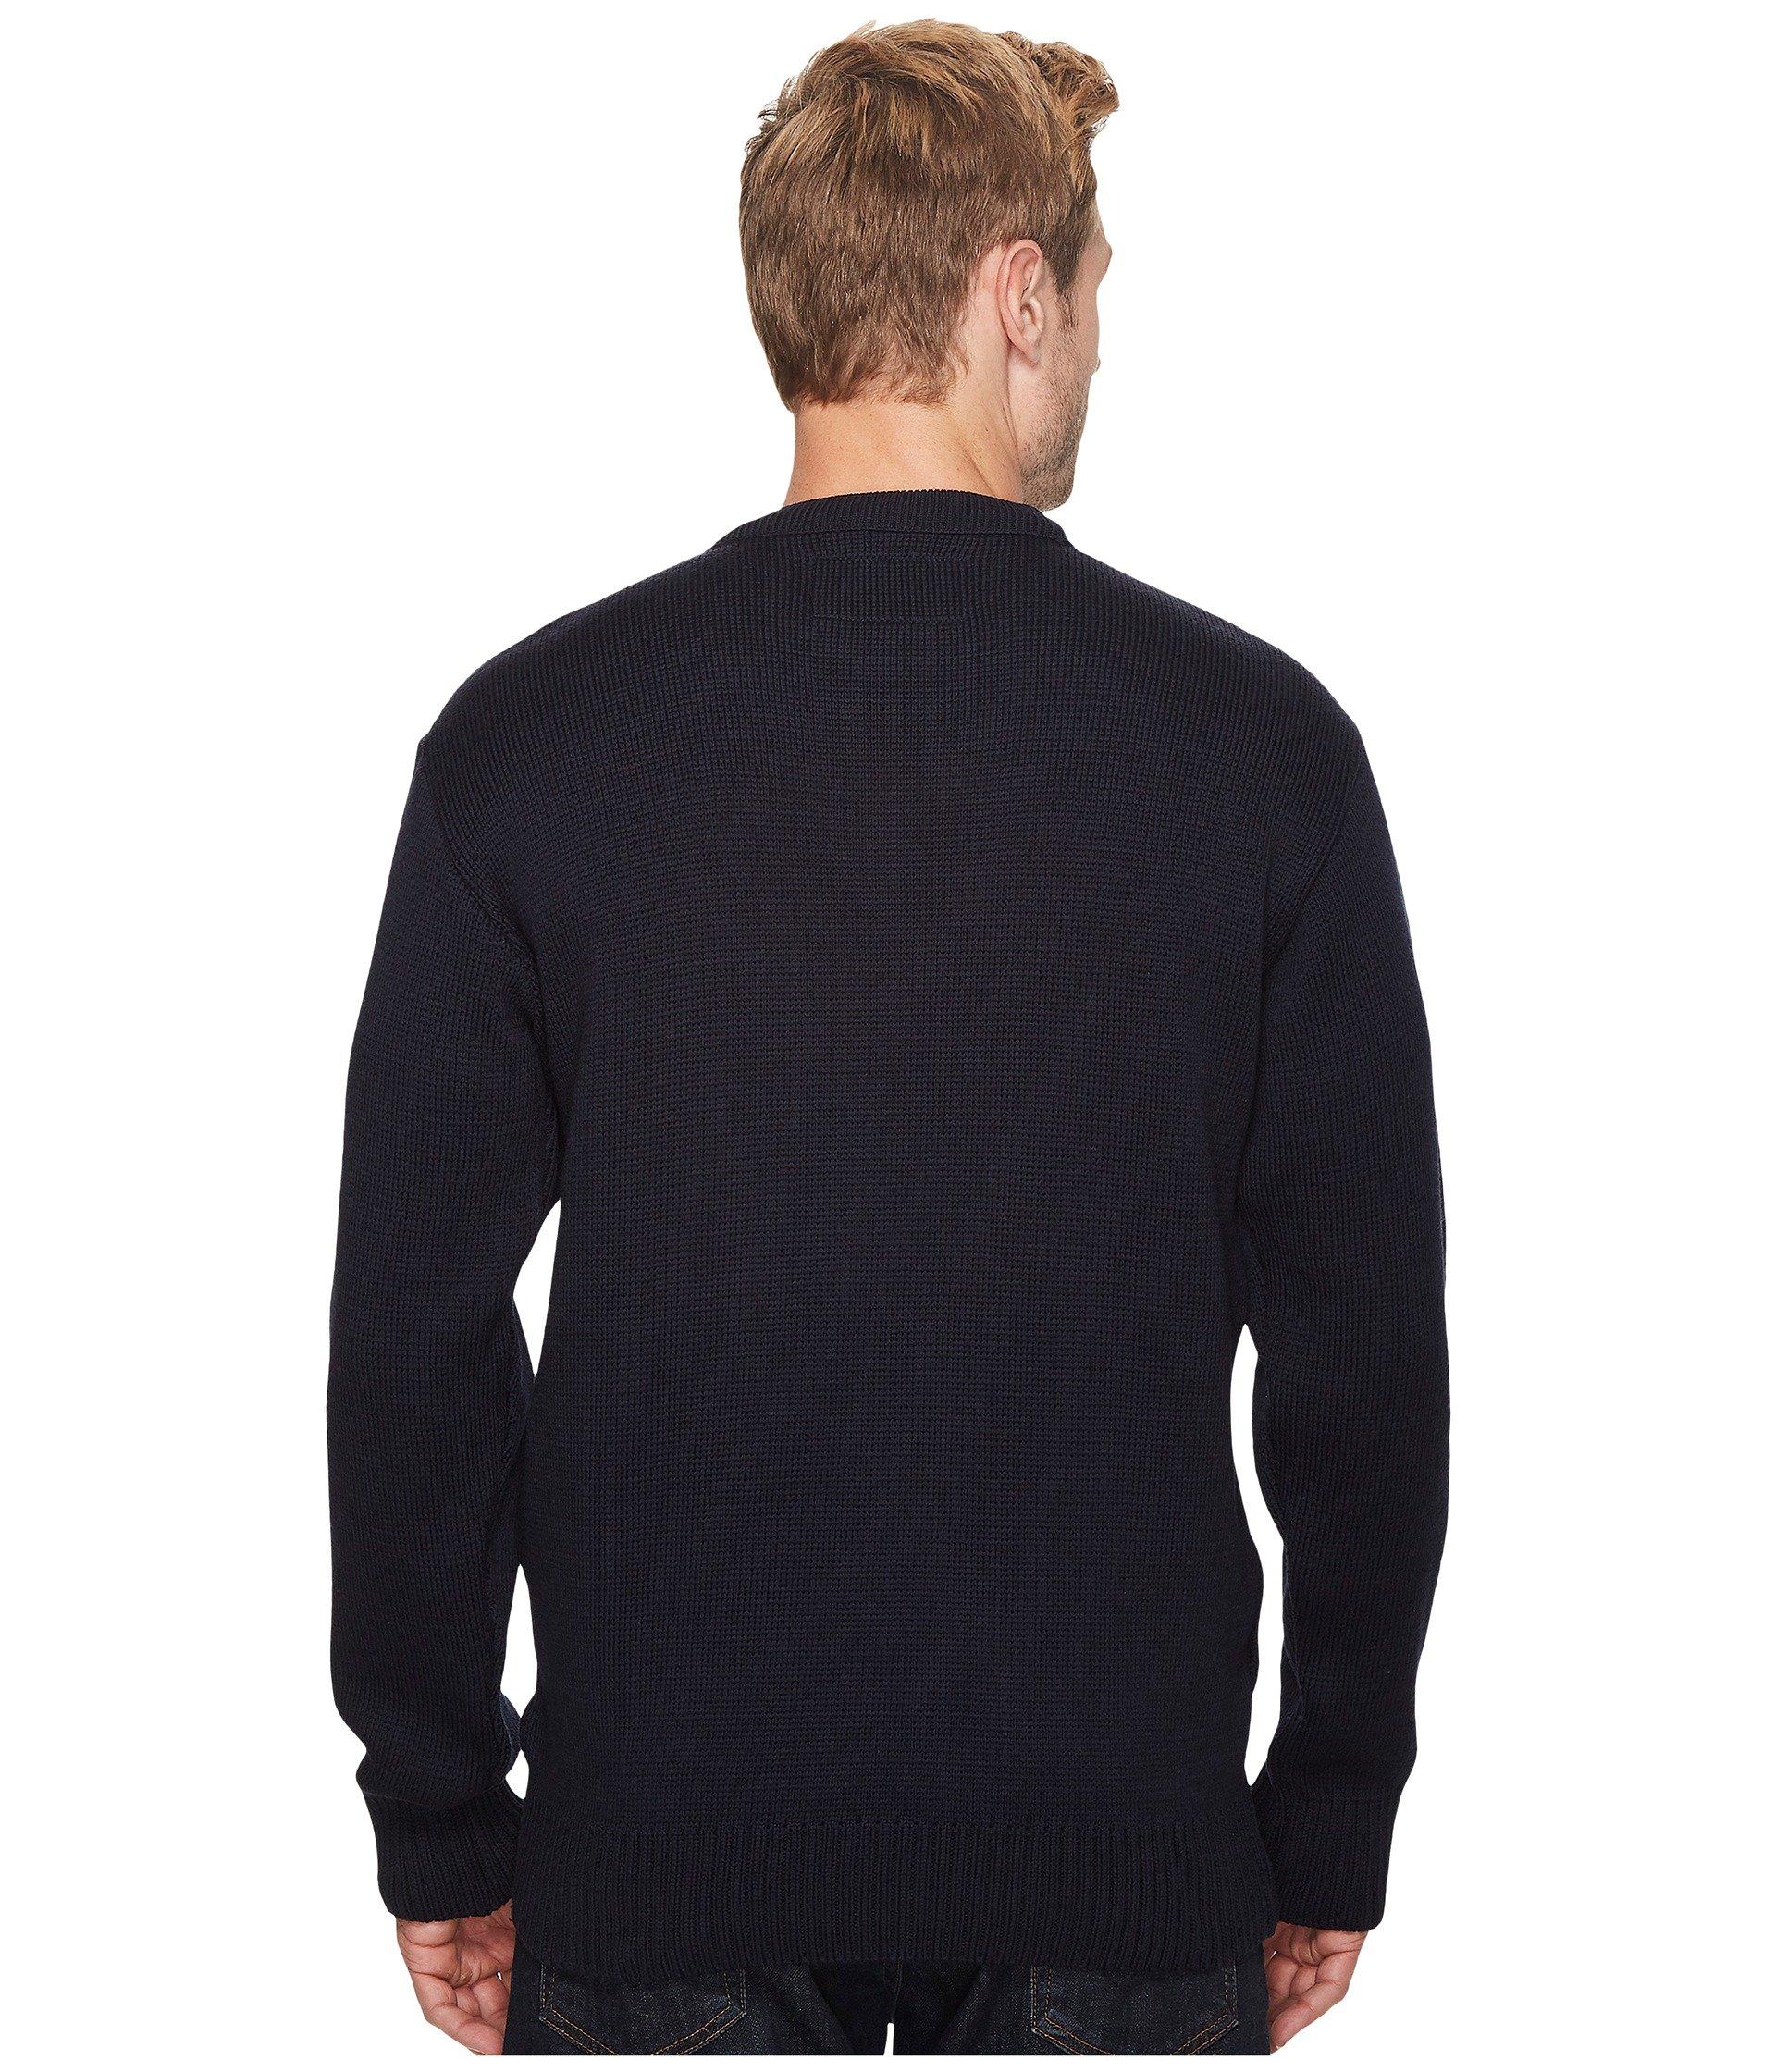 Filson Wool Crew Neck Guide Sweater in Navy (Blue) for Men - Lyst